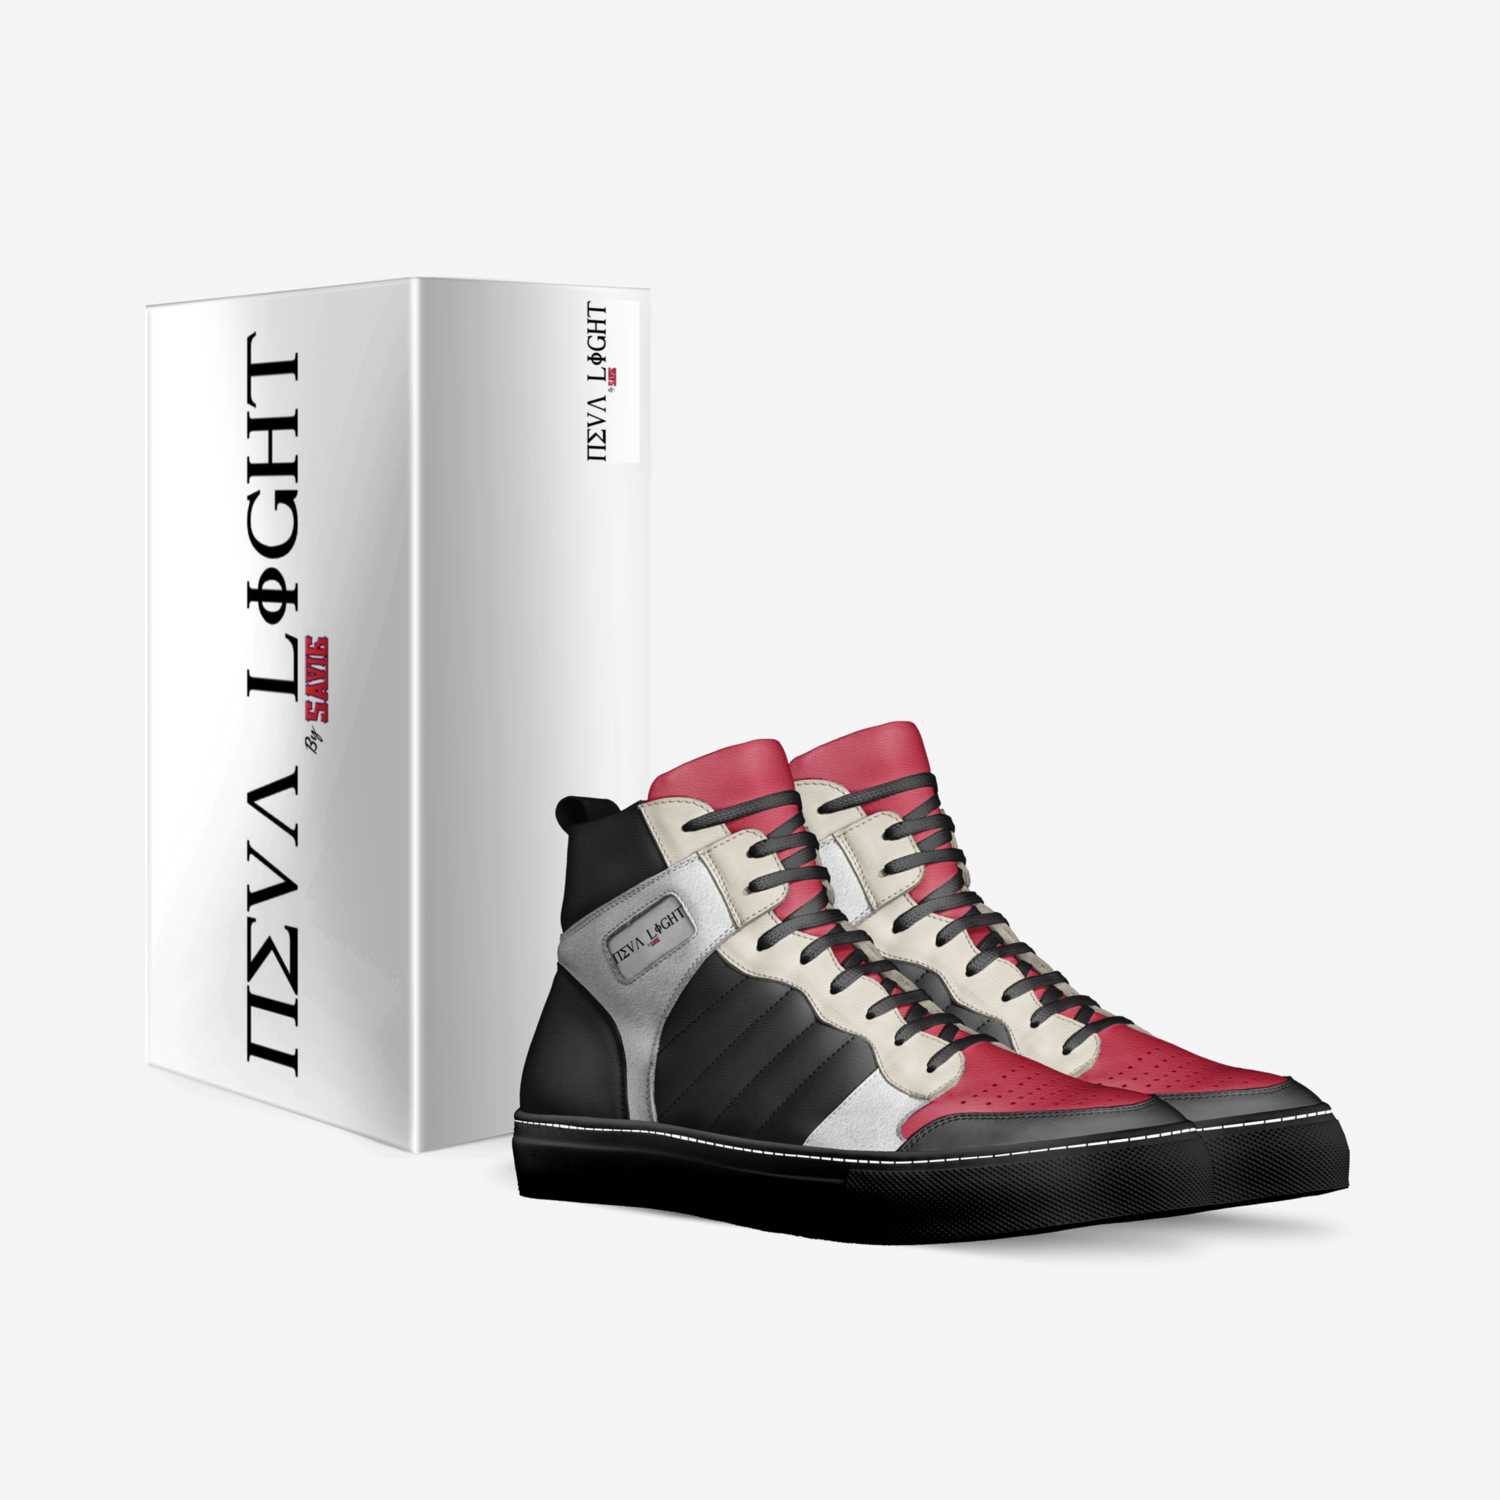 NEVA LIGHT 1's custom made in Italy shoes by Joshua Rosalejos | Box view